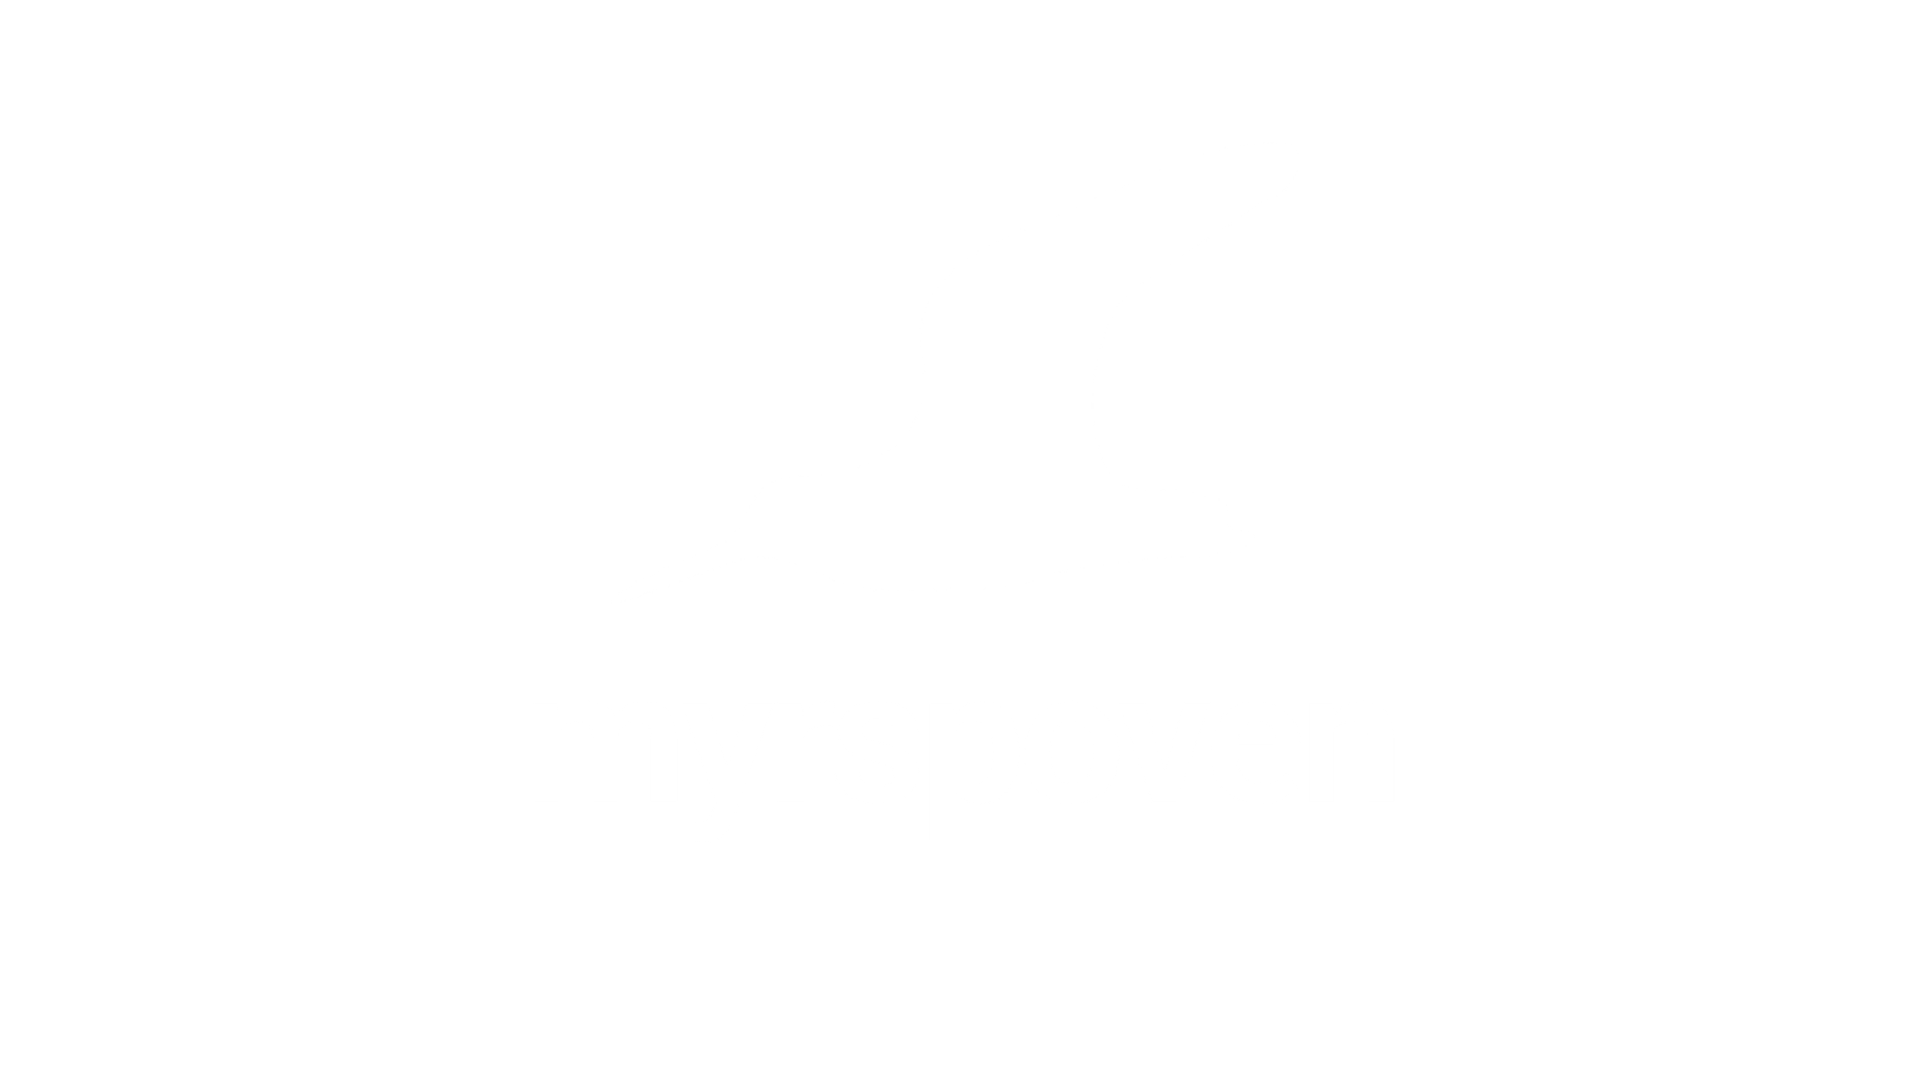 Myrspoven